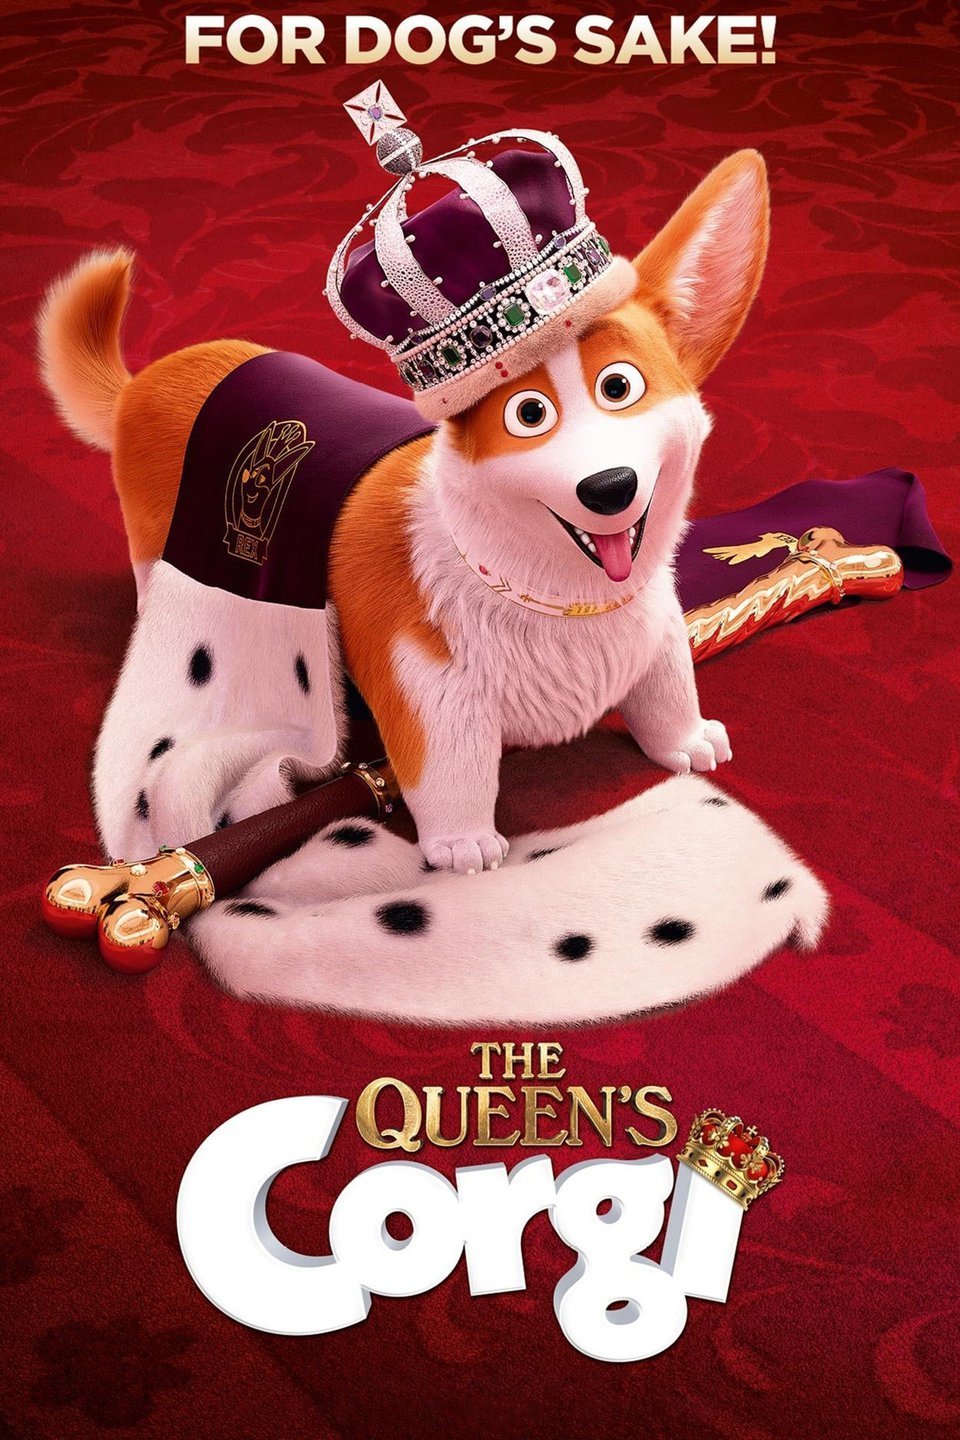 [MINI Super-HQ] The Queen’s Corgi (2019) จุ้นสี่ขา หมาเจ้านาย [1080p] [พากย์ไทย 5.1 + เสียงอังกฤษ DTS] [บรรยายไทย + อังกฤษ] [เสียงไทย + ซับไทย] [OPENLOAD]